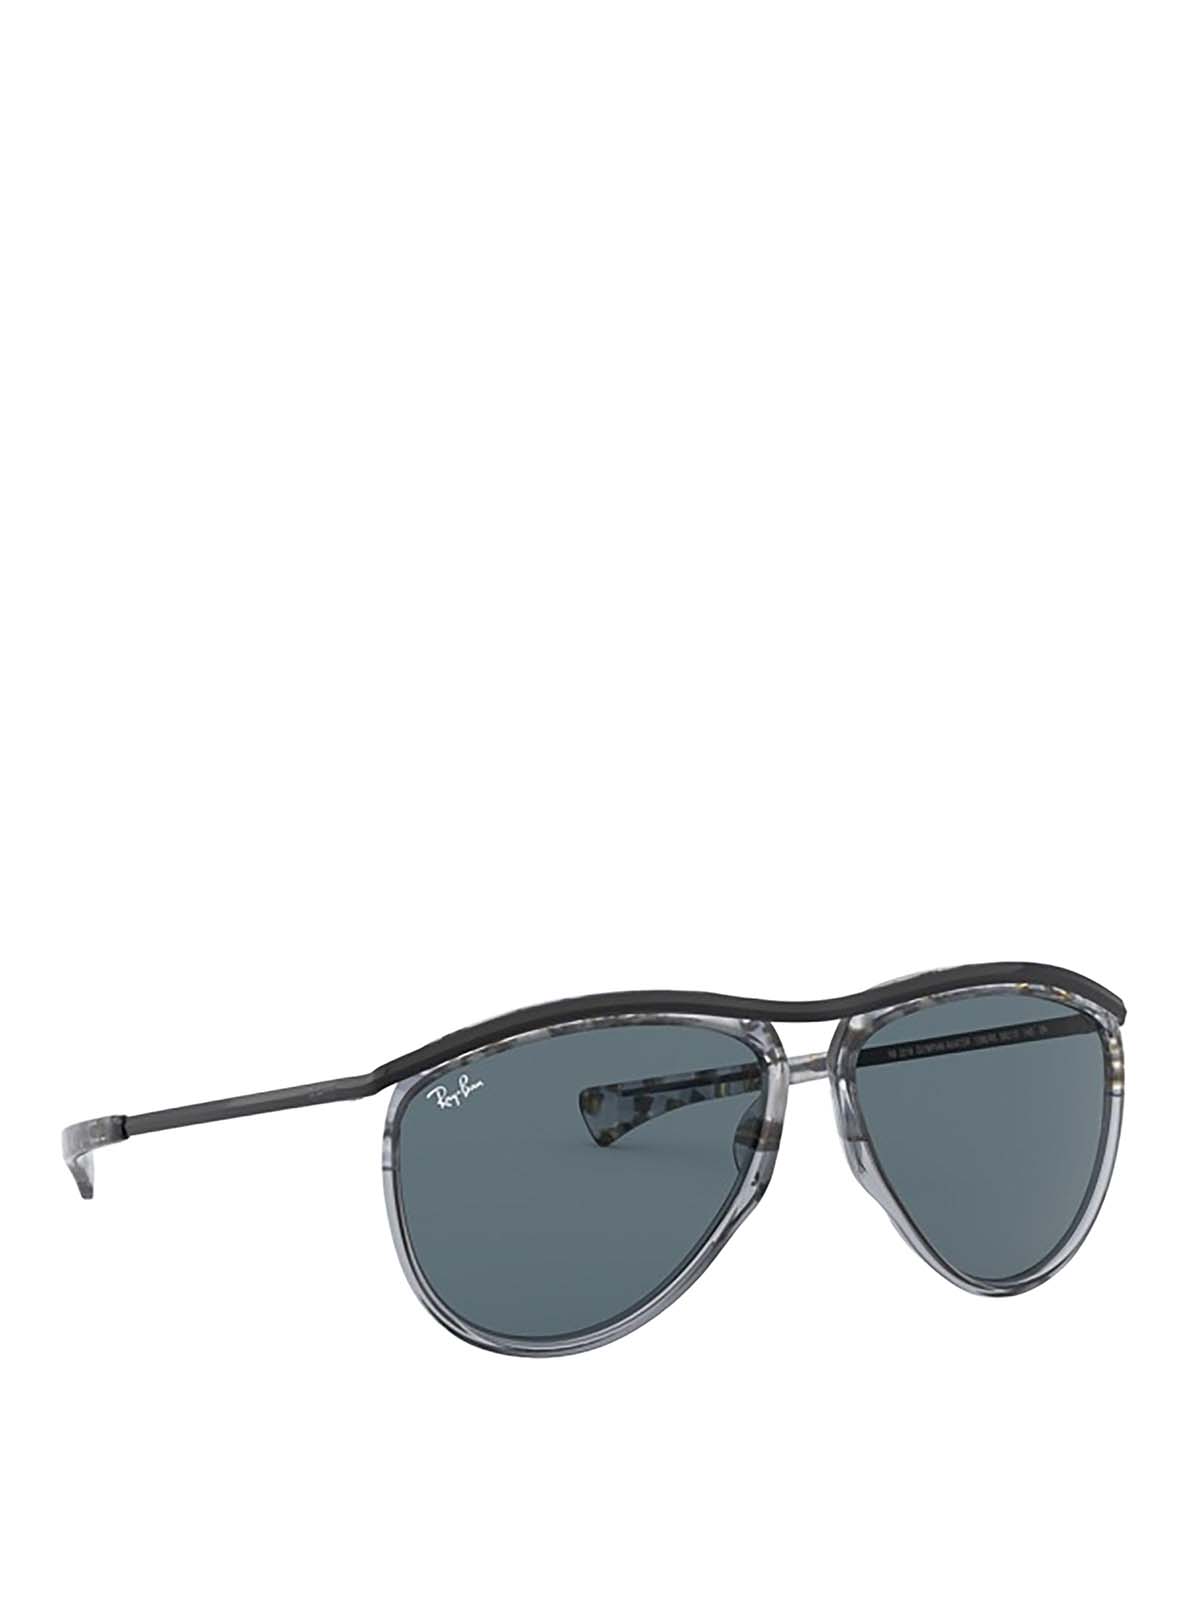 Sunglasses Ray Ban - Aviator Olympian metal sunglasses - RB22191286R5